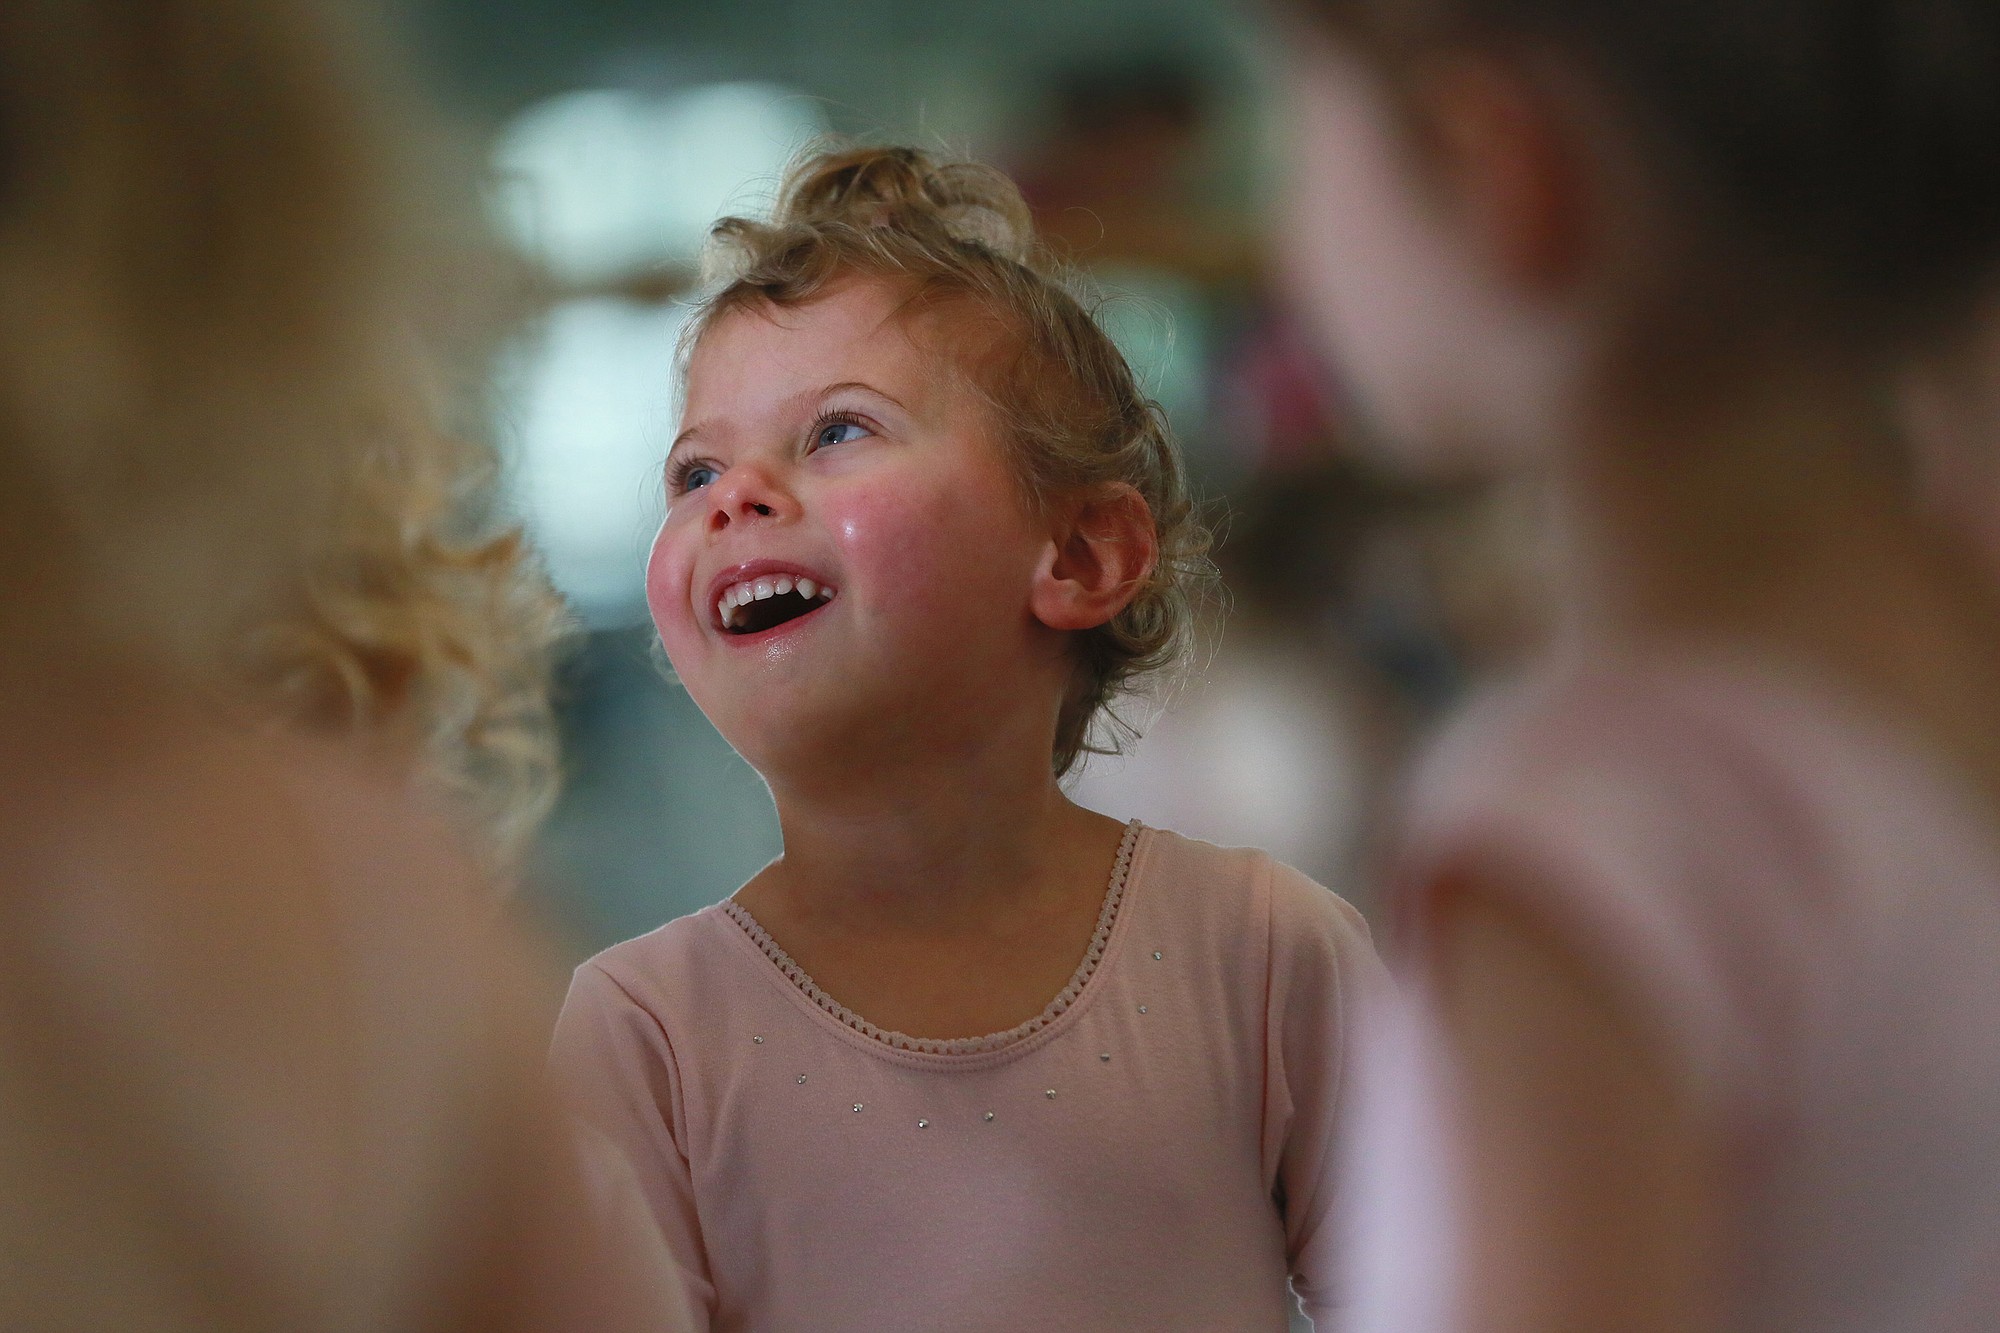 Svea HansPetersen, 4, attends a creative movement class at the Vashon Allied Arts Center for Dance on Vashon Island.